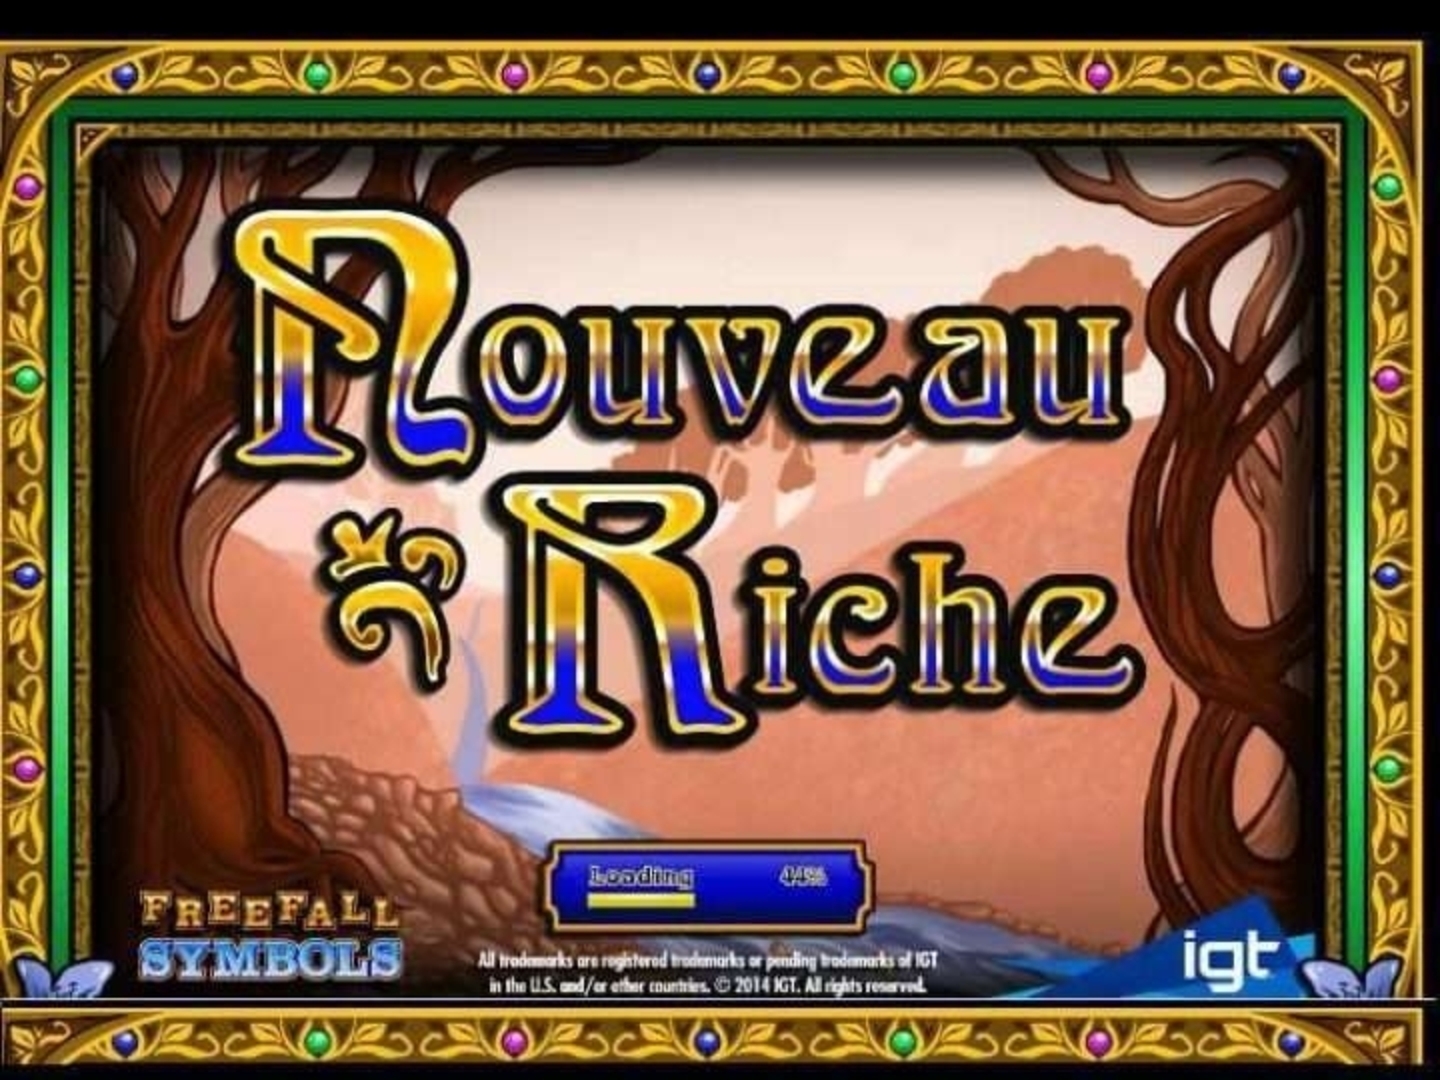 The Nouveau Riche Online Slot Demo Game by IGT